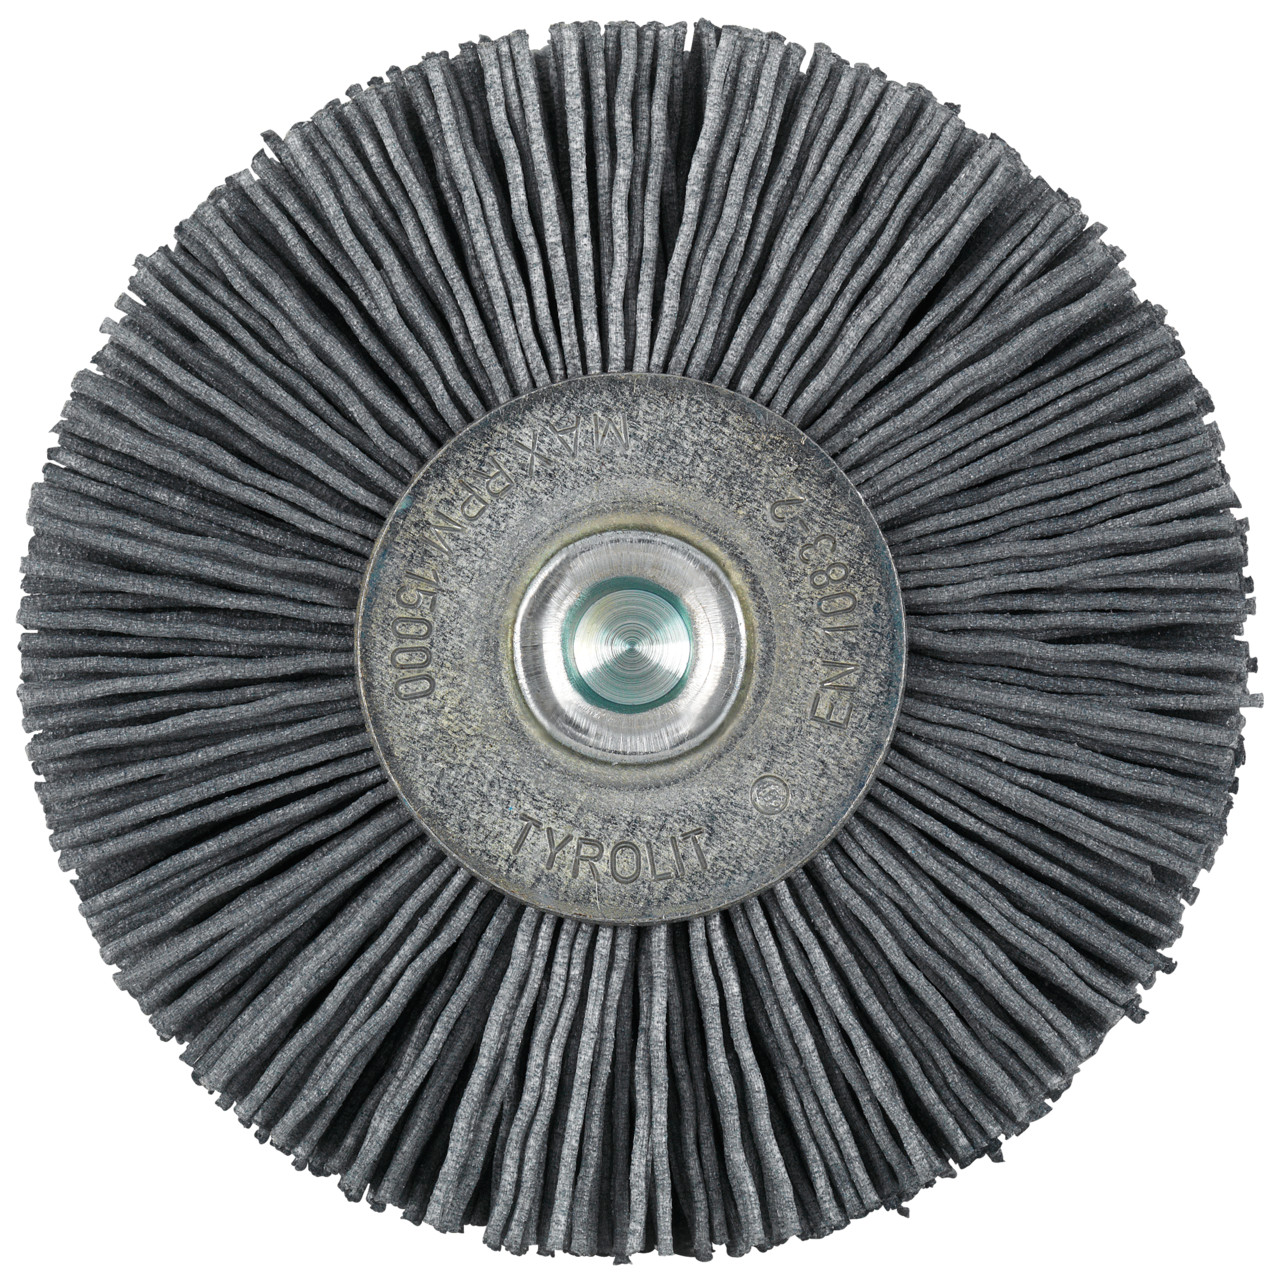 Tyrolit Round shank brushes DxLxH-GExI 50x20x12.5-6x30 For universal use, shape: 52RDK - (round shank brushes), Art. 34043572